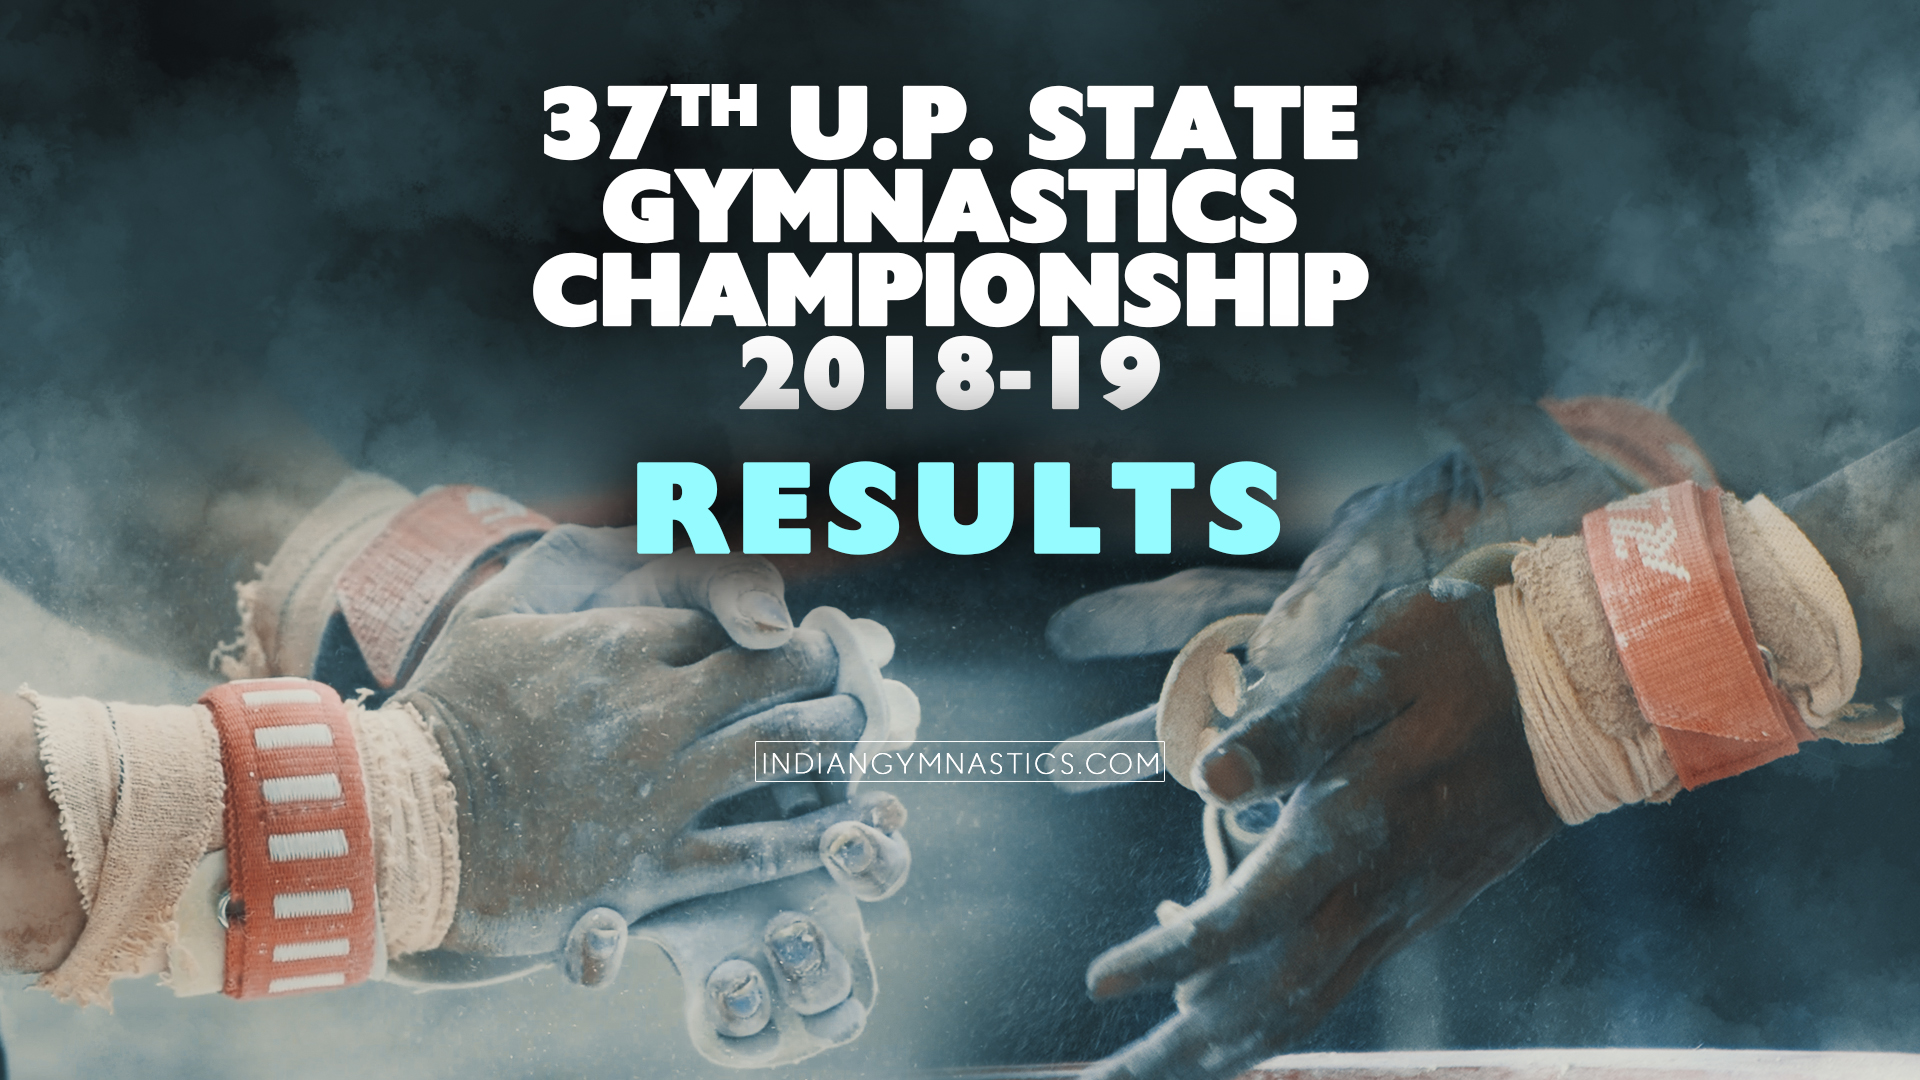 37th U.P. State Gymnastics Championship 2018-19 | Results